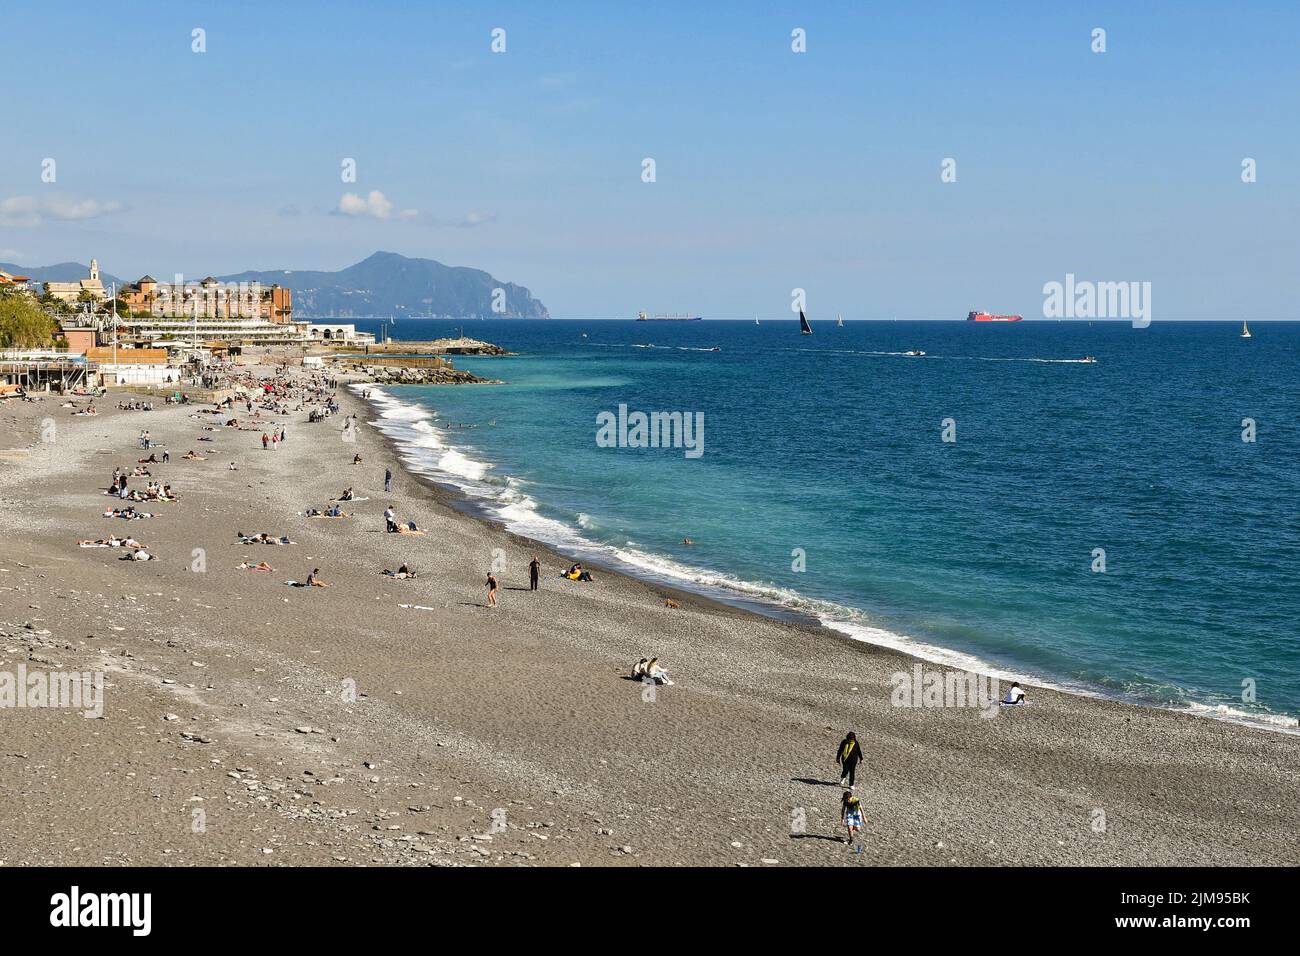 Scenic view of the beach of Albaro with tourists on Easter Monday and the promontory of Portofino on the sea horizon, Genoa, Liguria, Italy Stock Photo